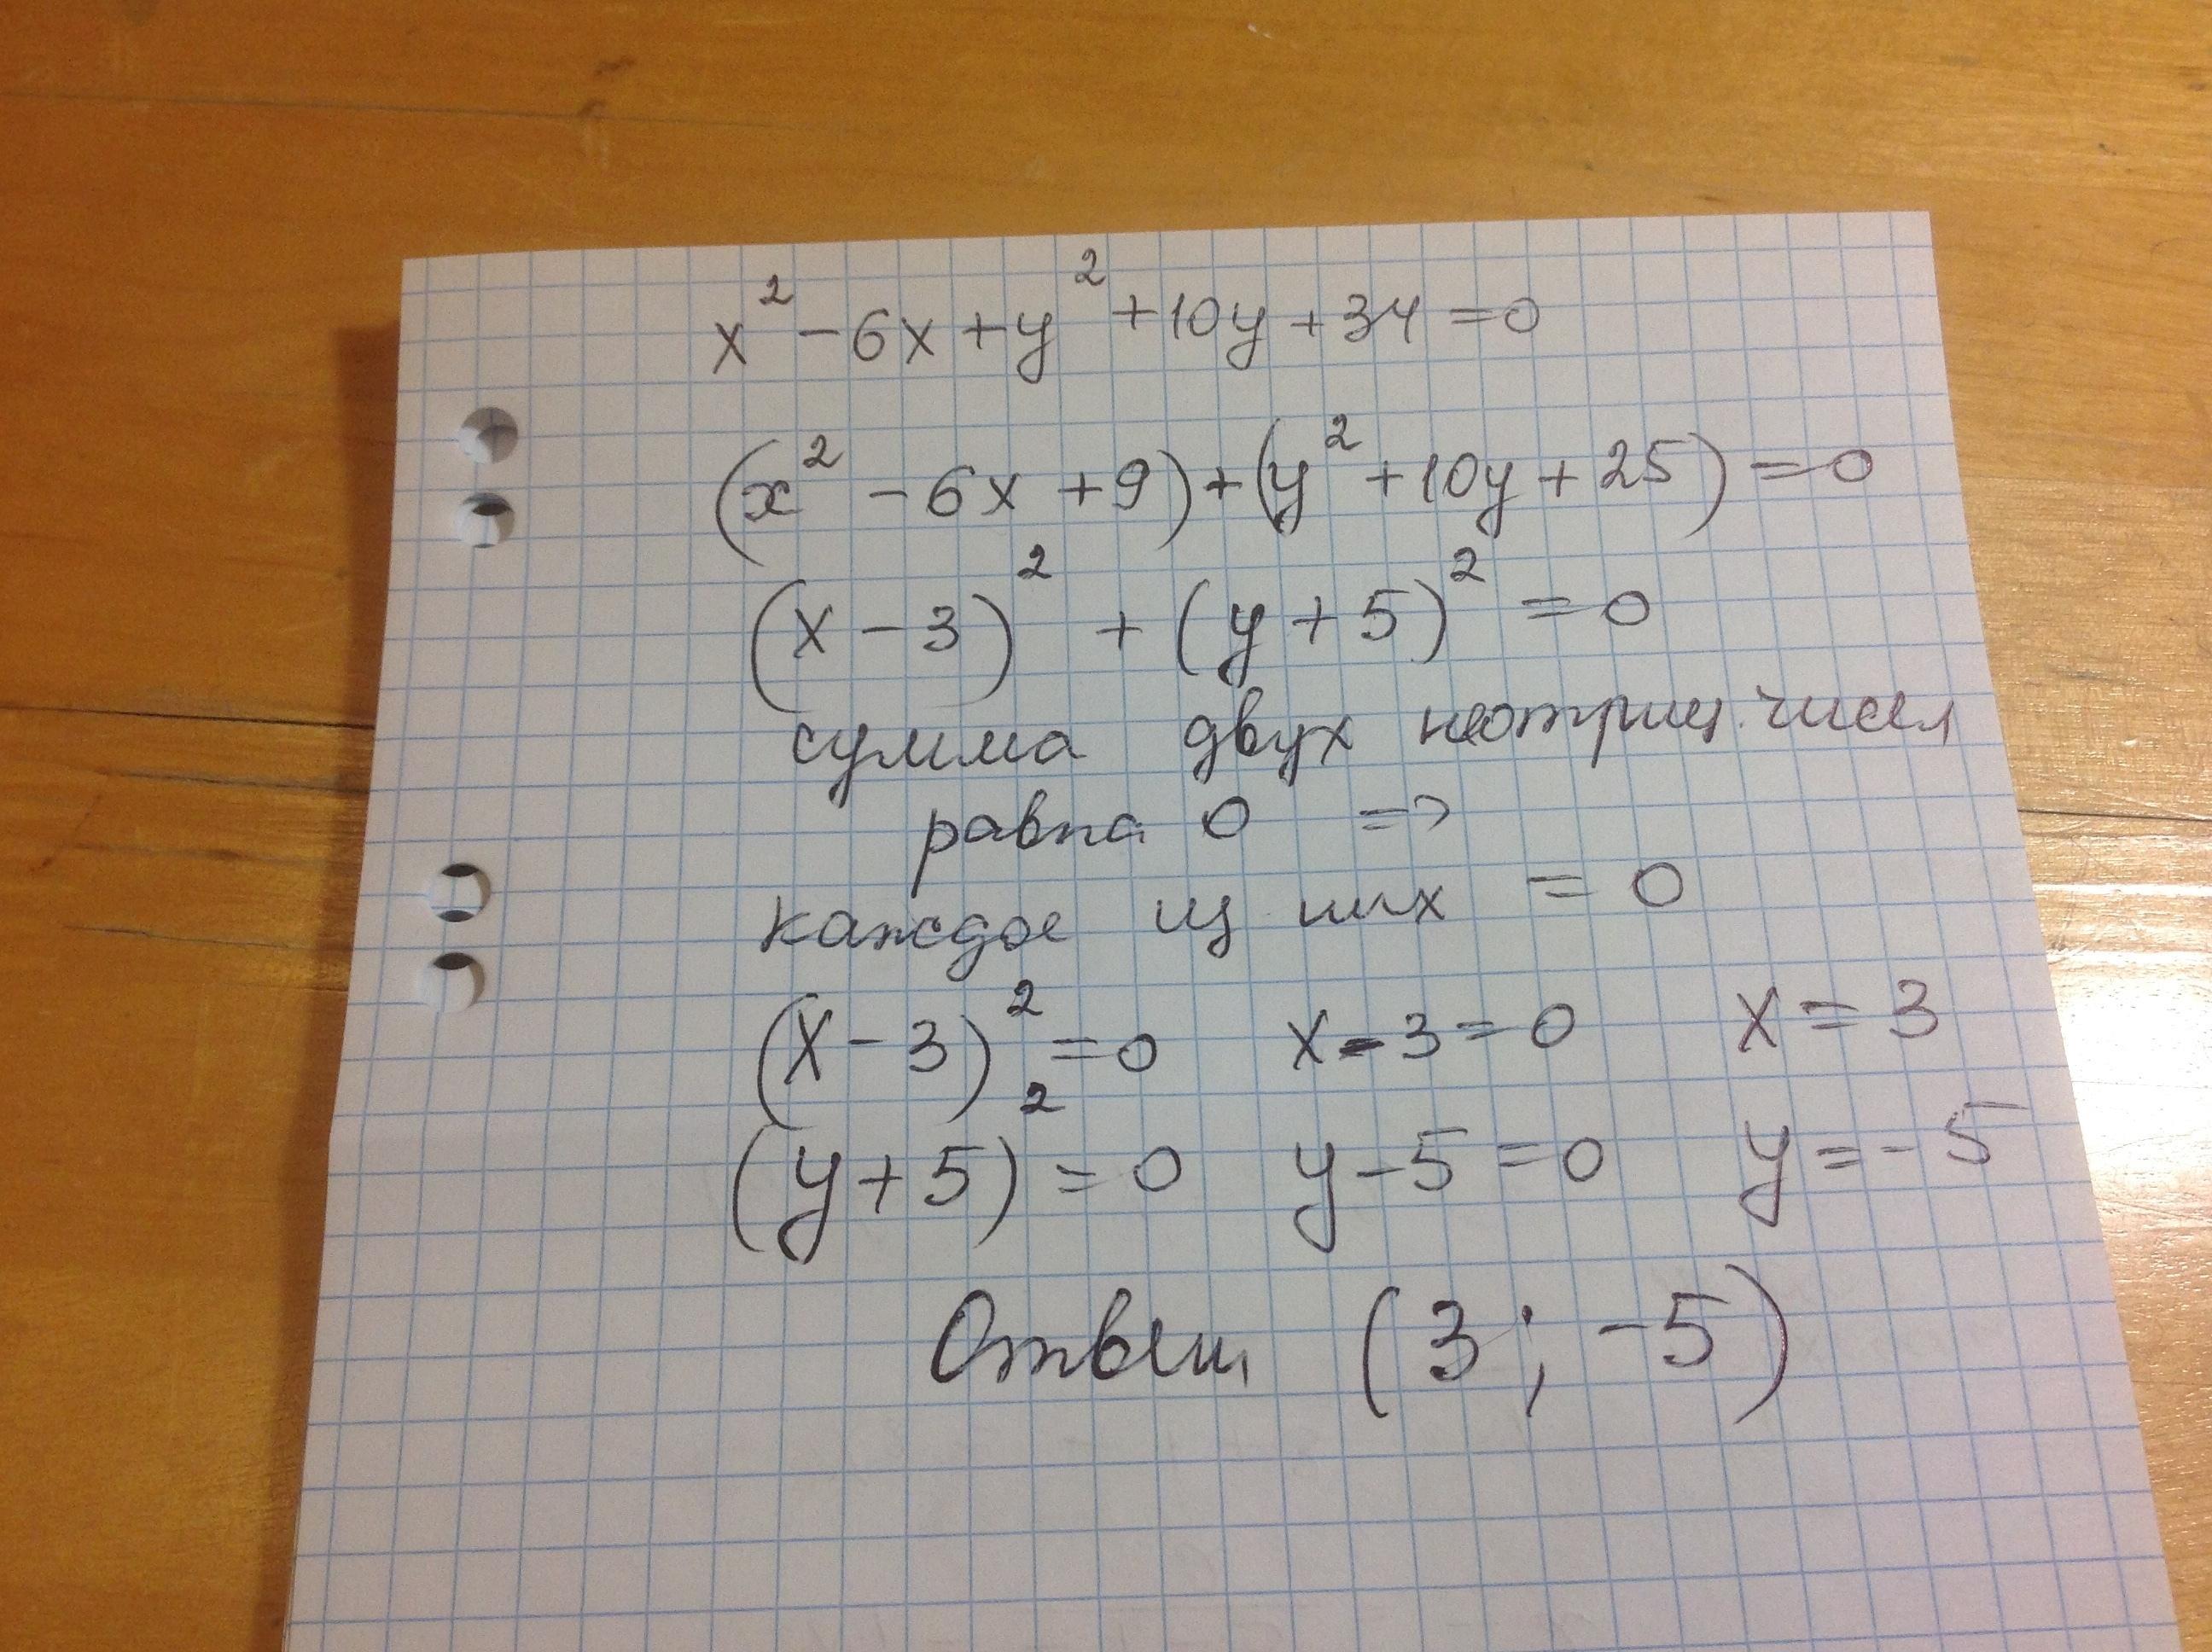 6x 2y 6 0. Решите уравнение x 2 y 2 10x 6y 34 0. (X−6)2 <10−−√(X−6) .. X2 + y2 − 2x + 6y + 10 = 0.. -2x^2-3x+34>0.